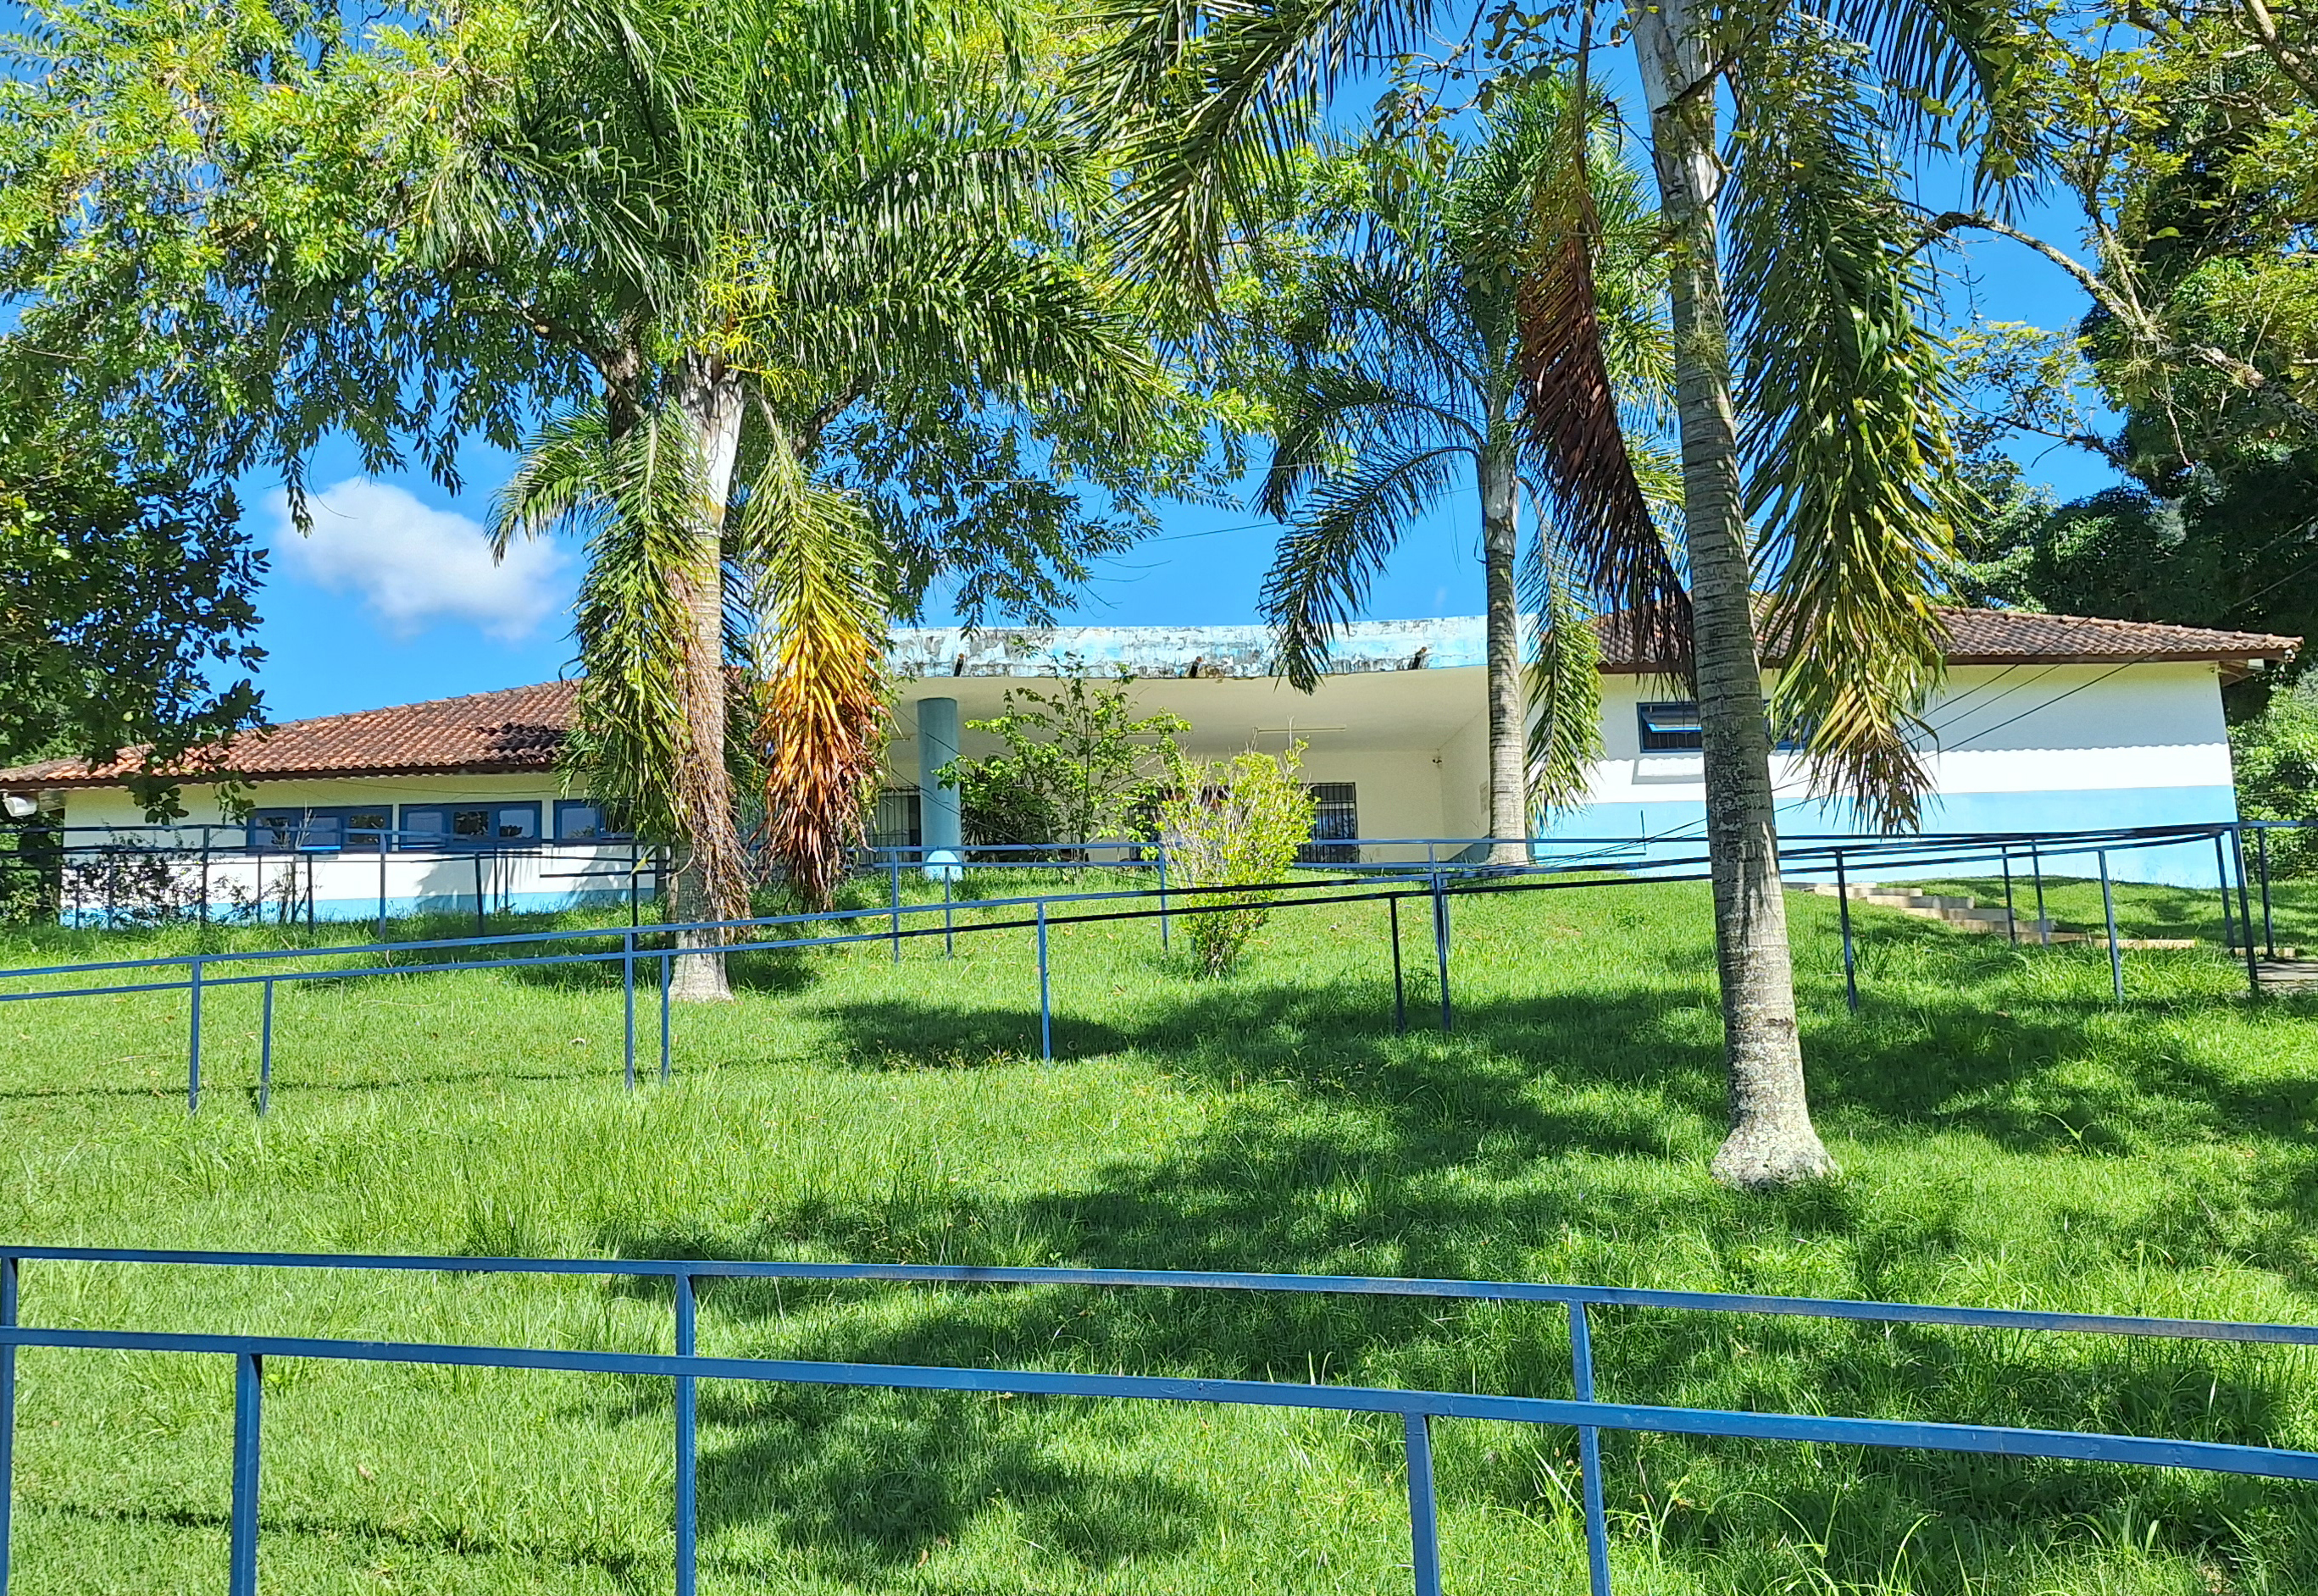 Escola Técnica Municipal Natálio Salvador Antunes, localizada na Avenida Miguel Peixoto Guimarães, no distrito de Córrego do Ouro